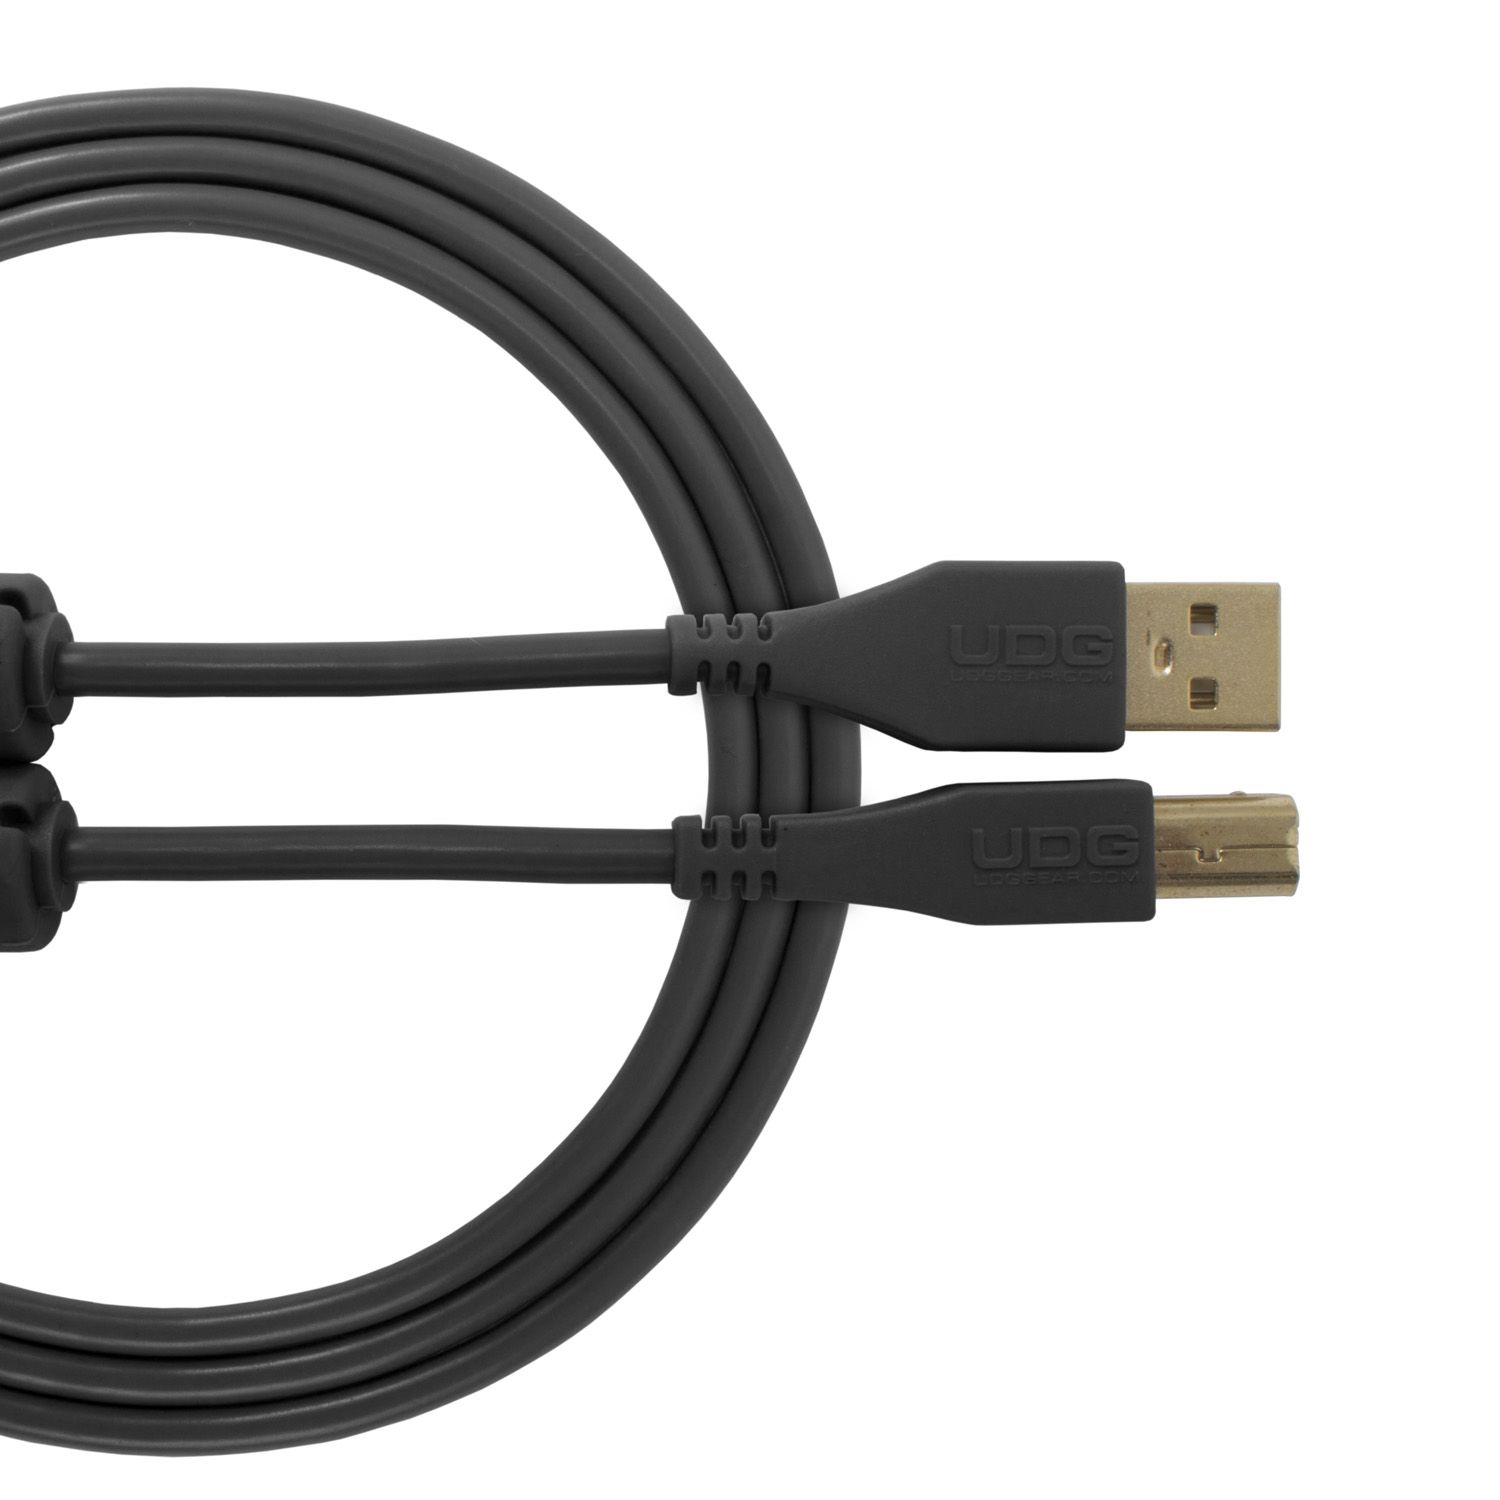 U95003BL UDG AUDIO CABLE USB 2.0 A-B BLACK STRA 3M